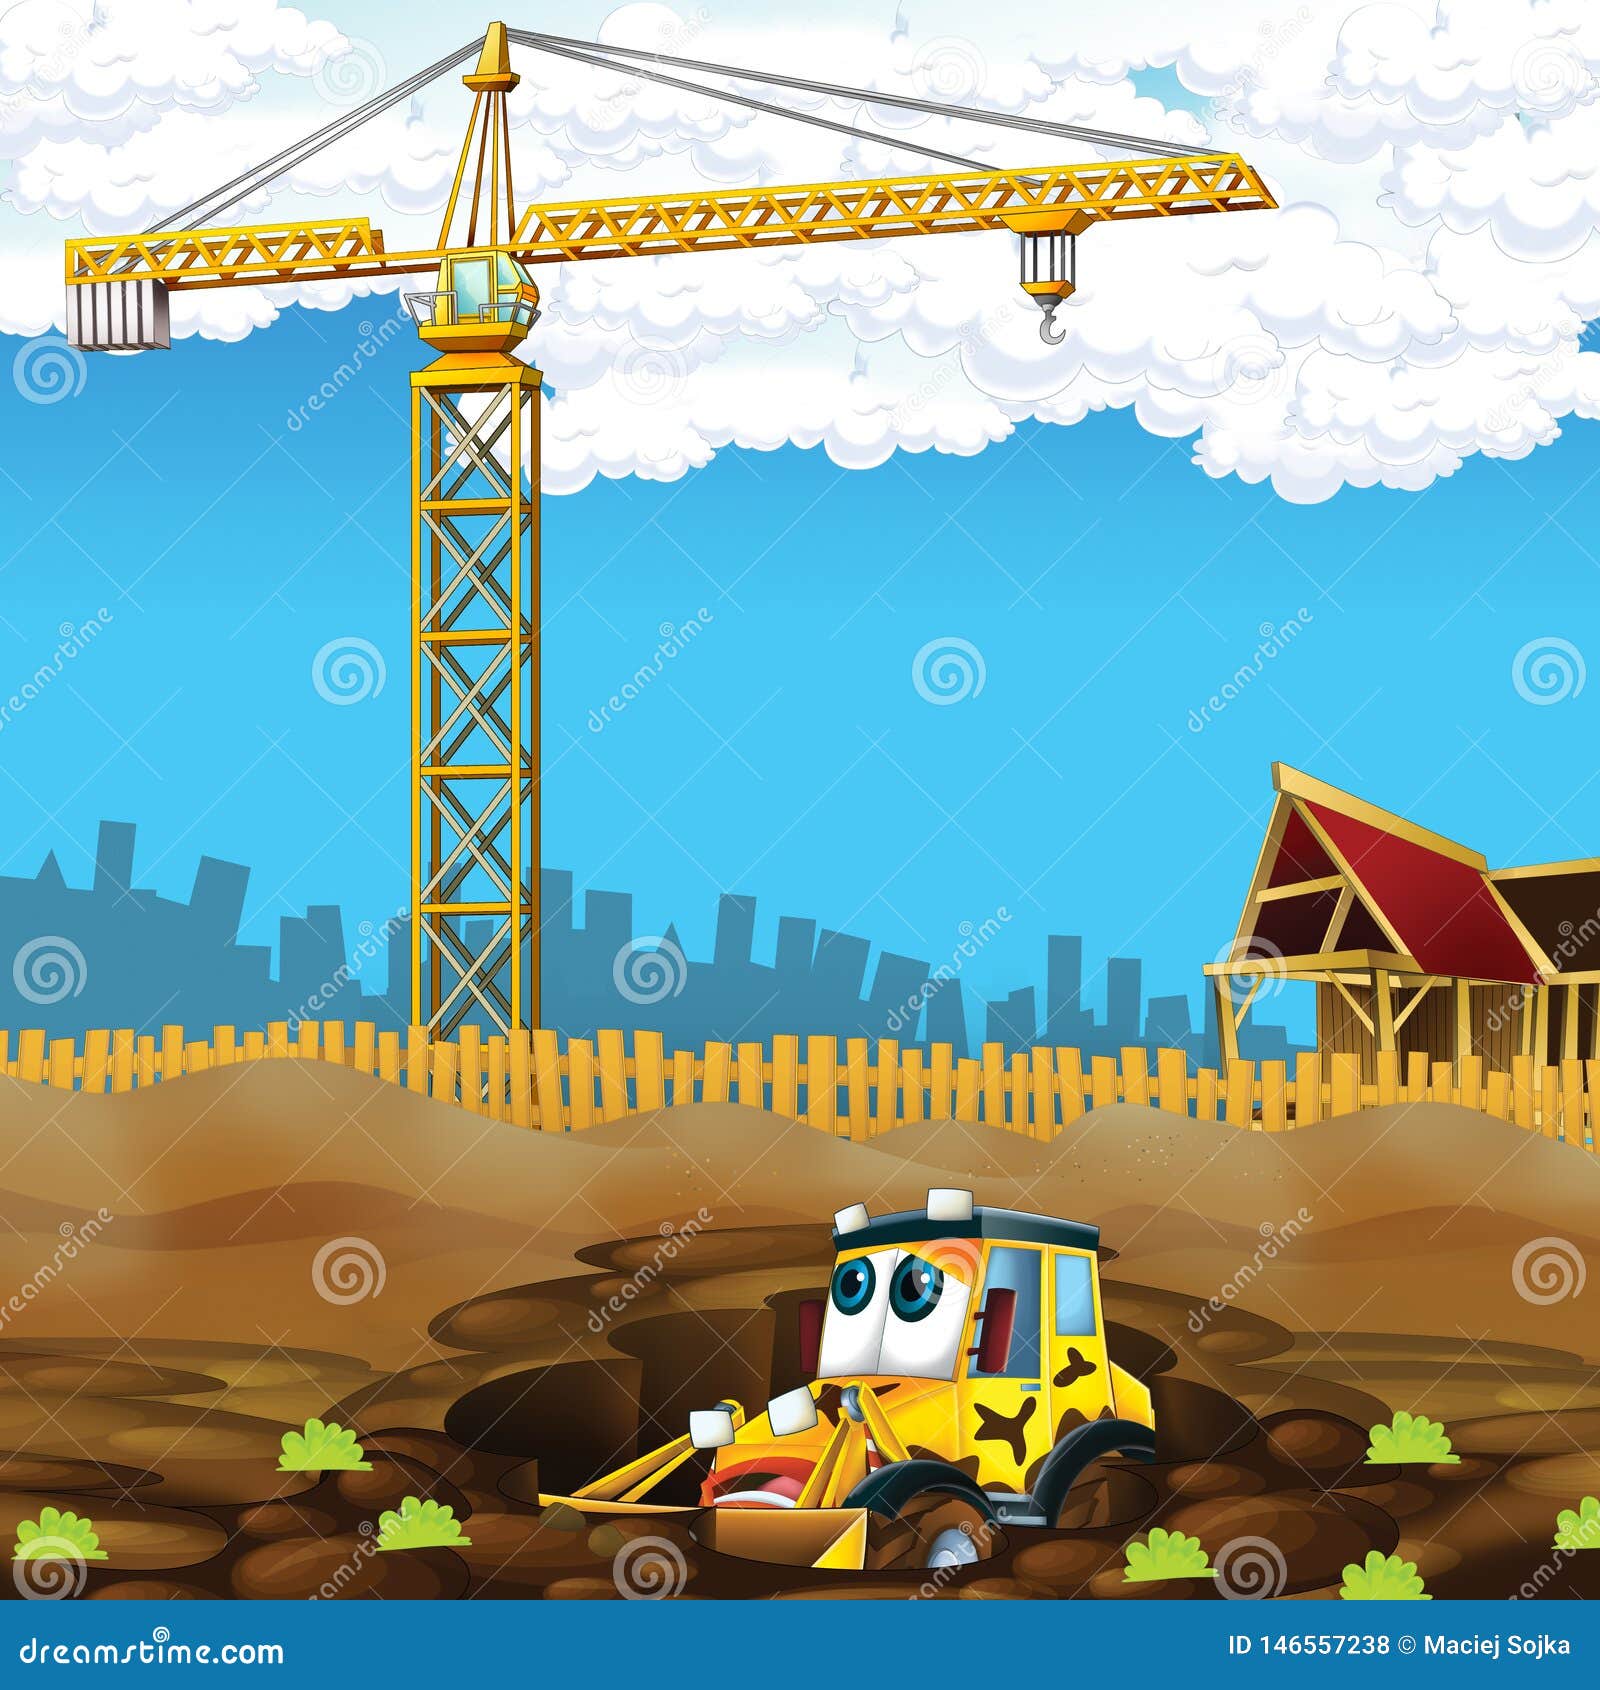 Cartoon Scene with Excavator Digger on the Street Near the Building on the  Construction Site - Illustration for Children Kids Stock Illustration -  Illustration of automotive, joyful: 146557238